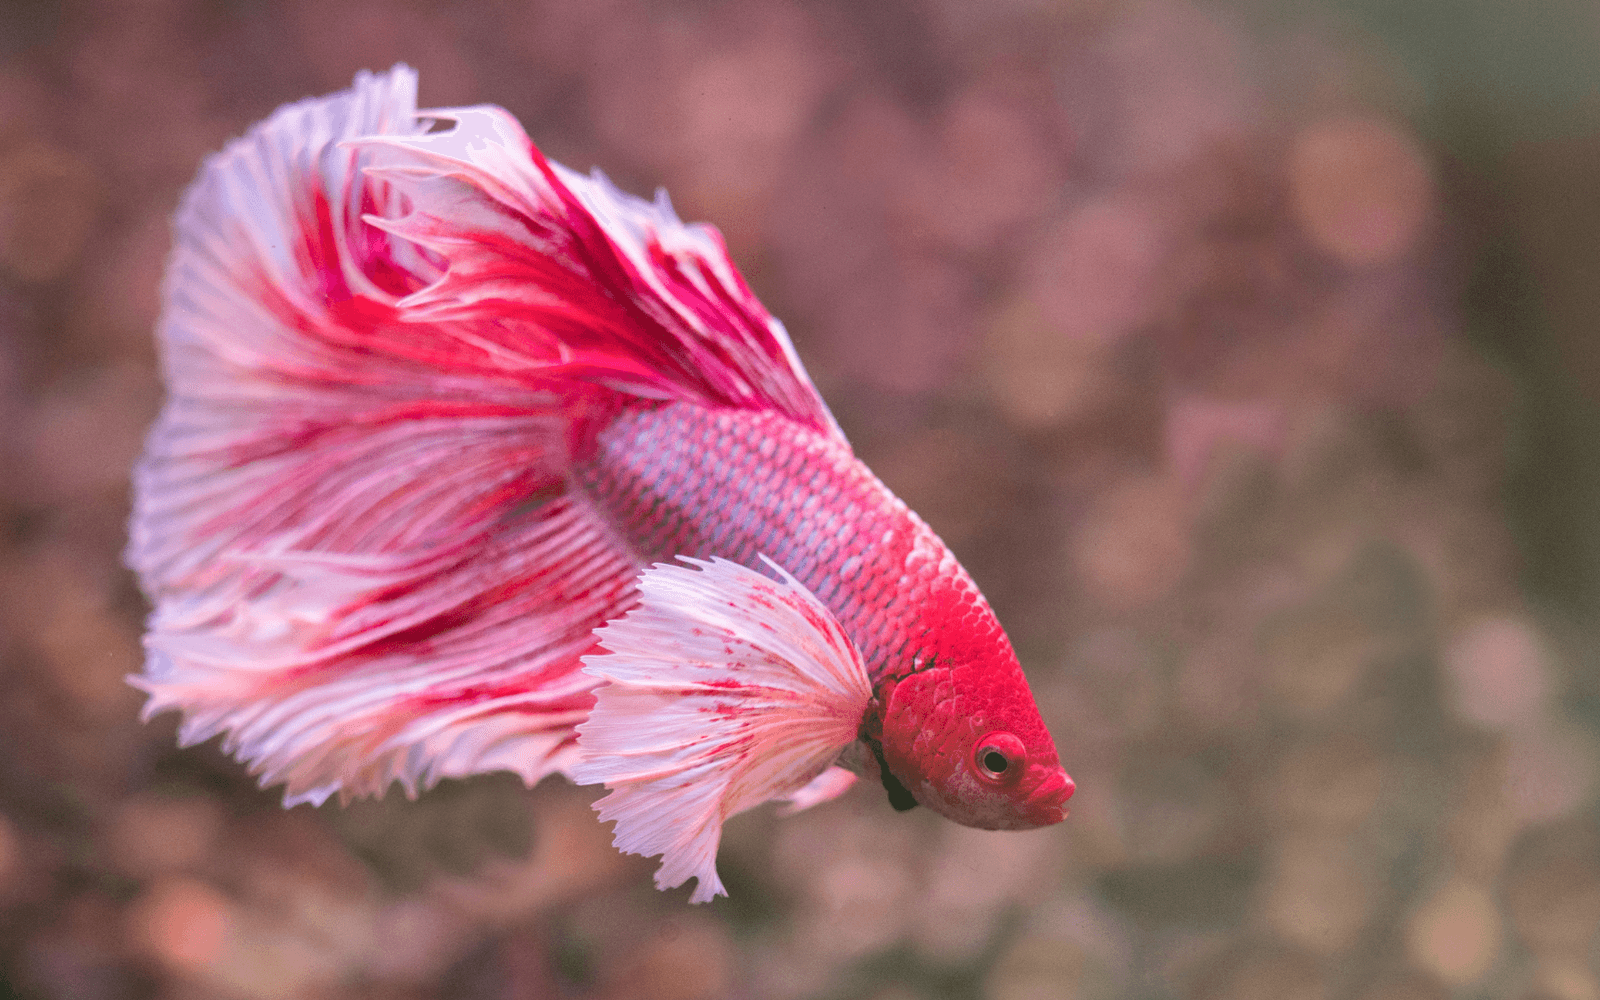 A red betta fish